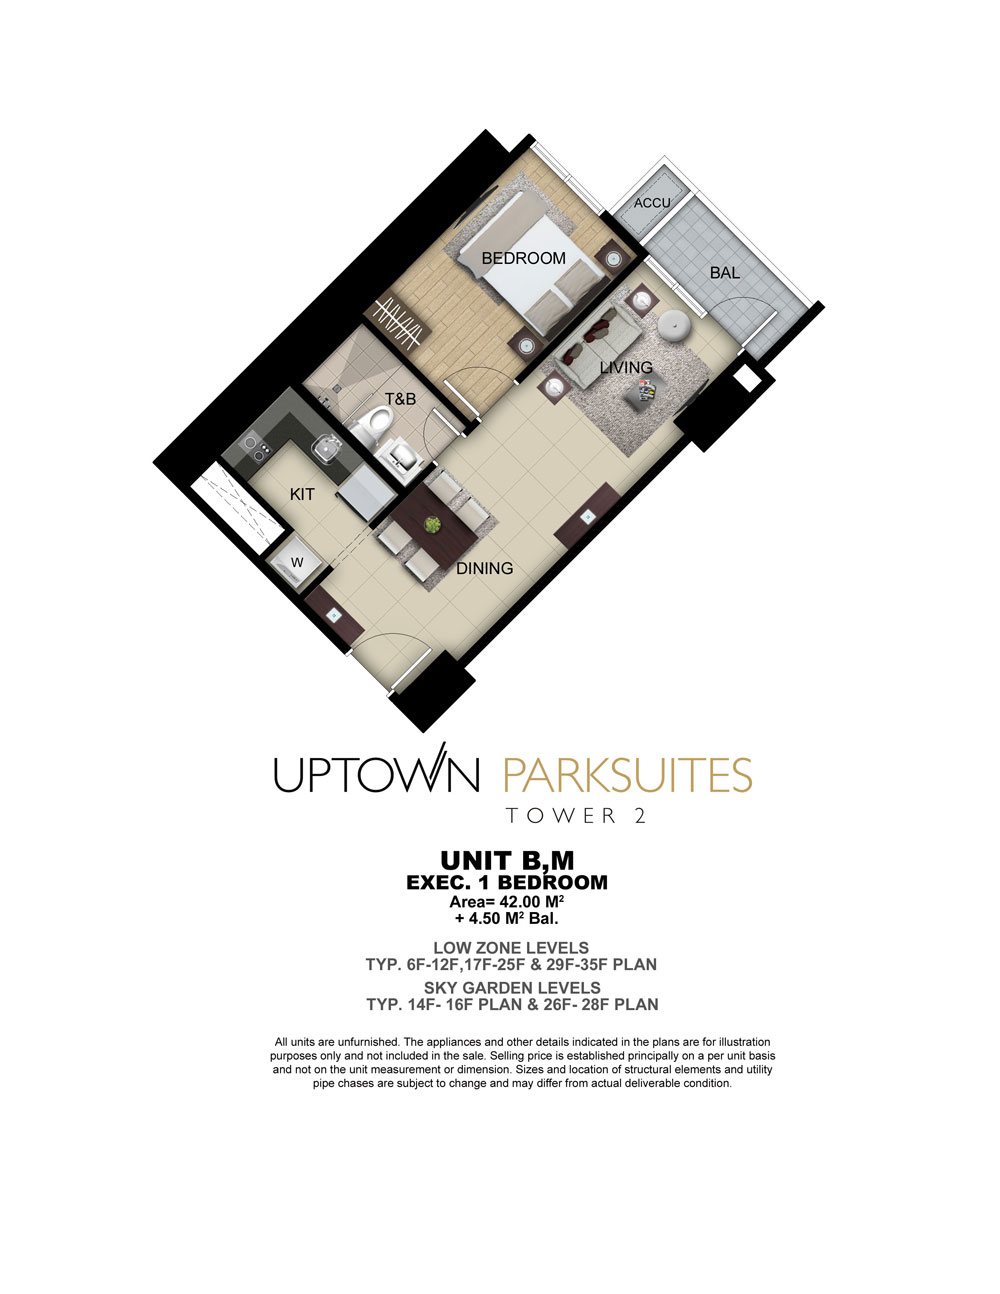 Uptown Parksuites Floor Plans